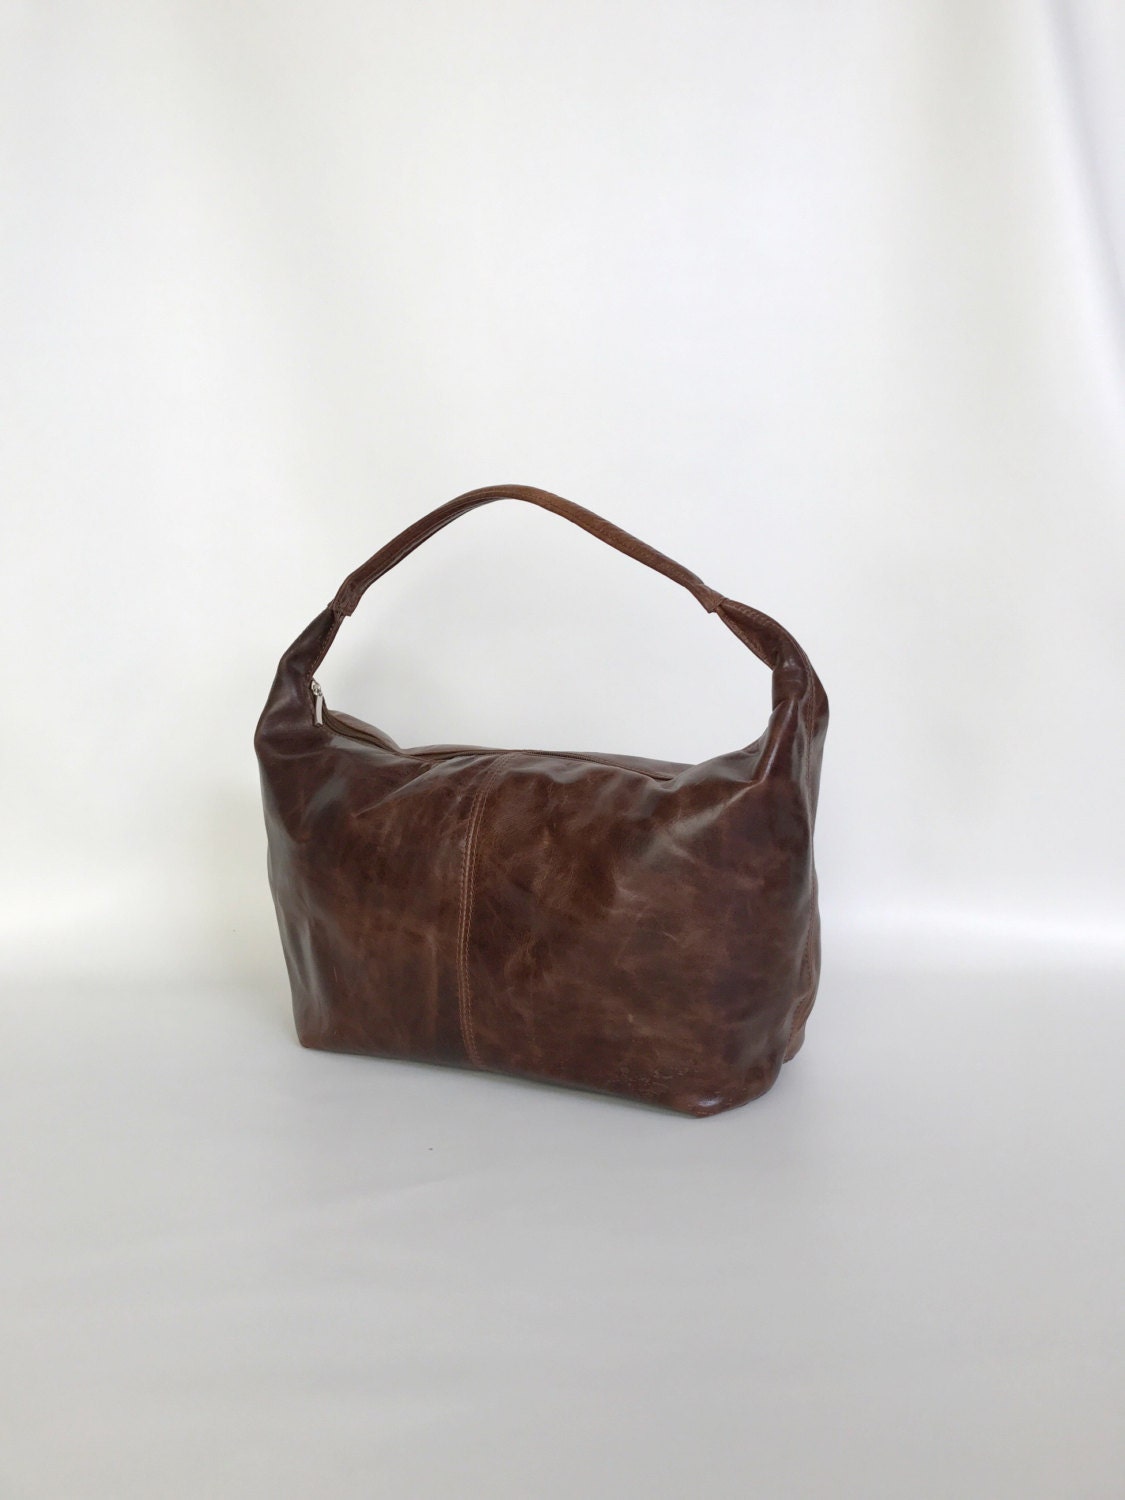 Distressed brown leather hobo purse rustic everyday handbag